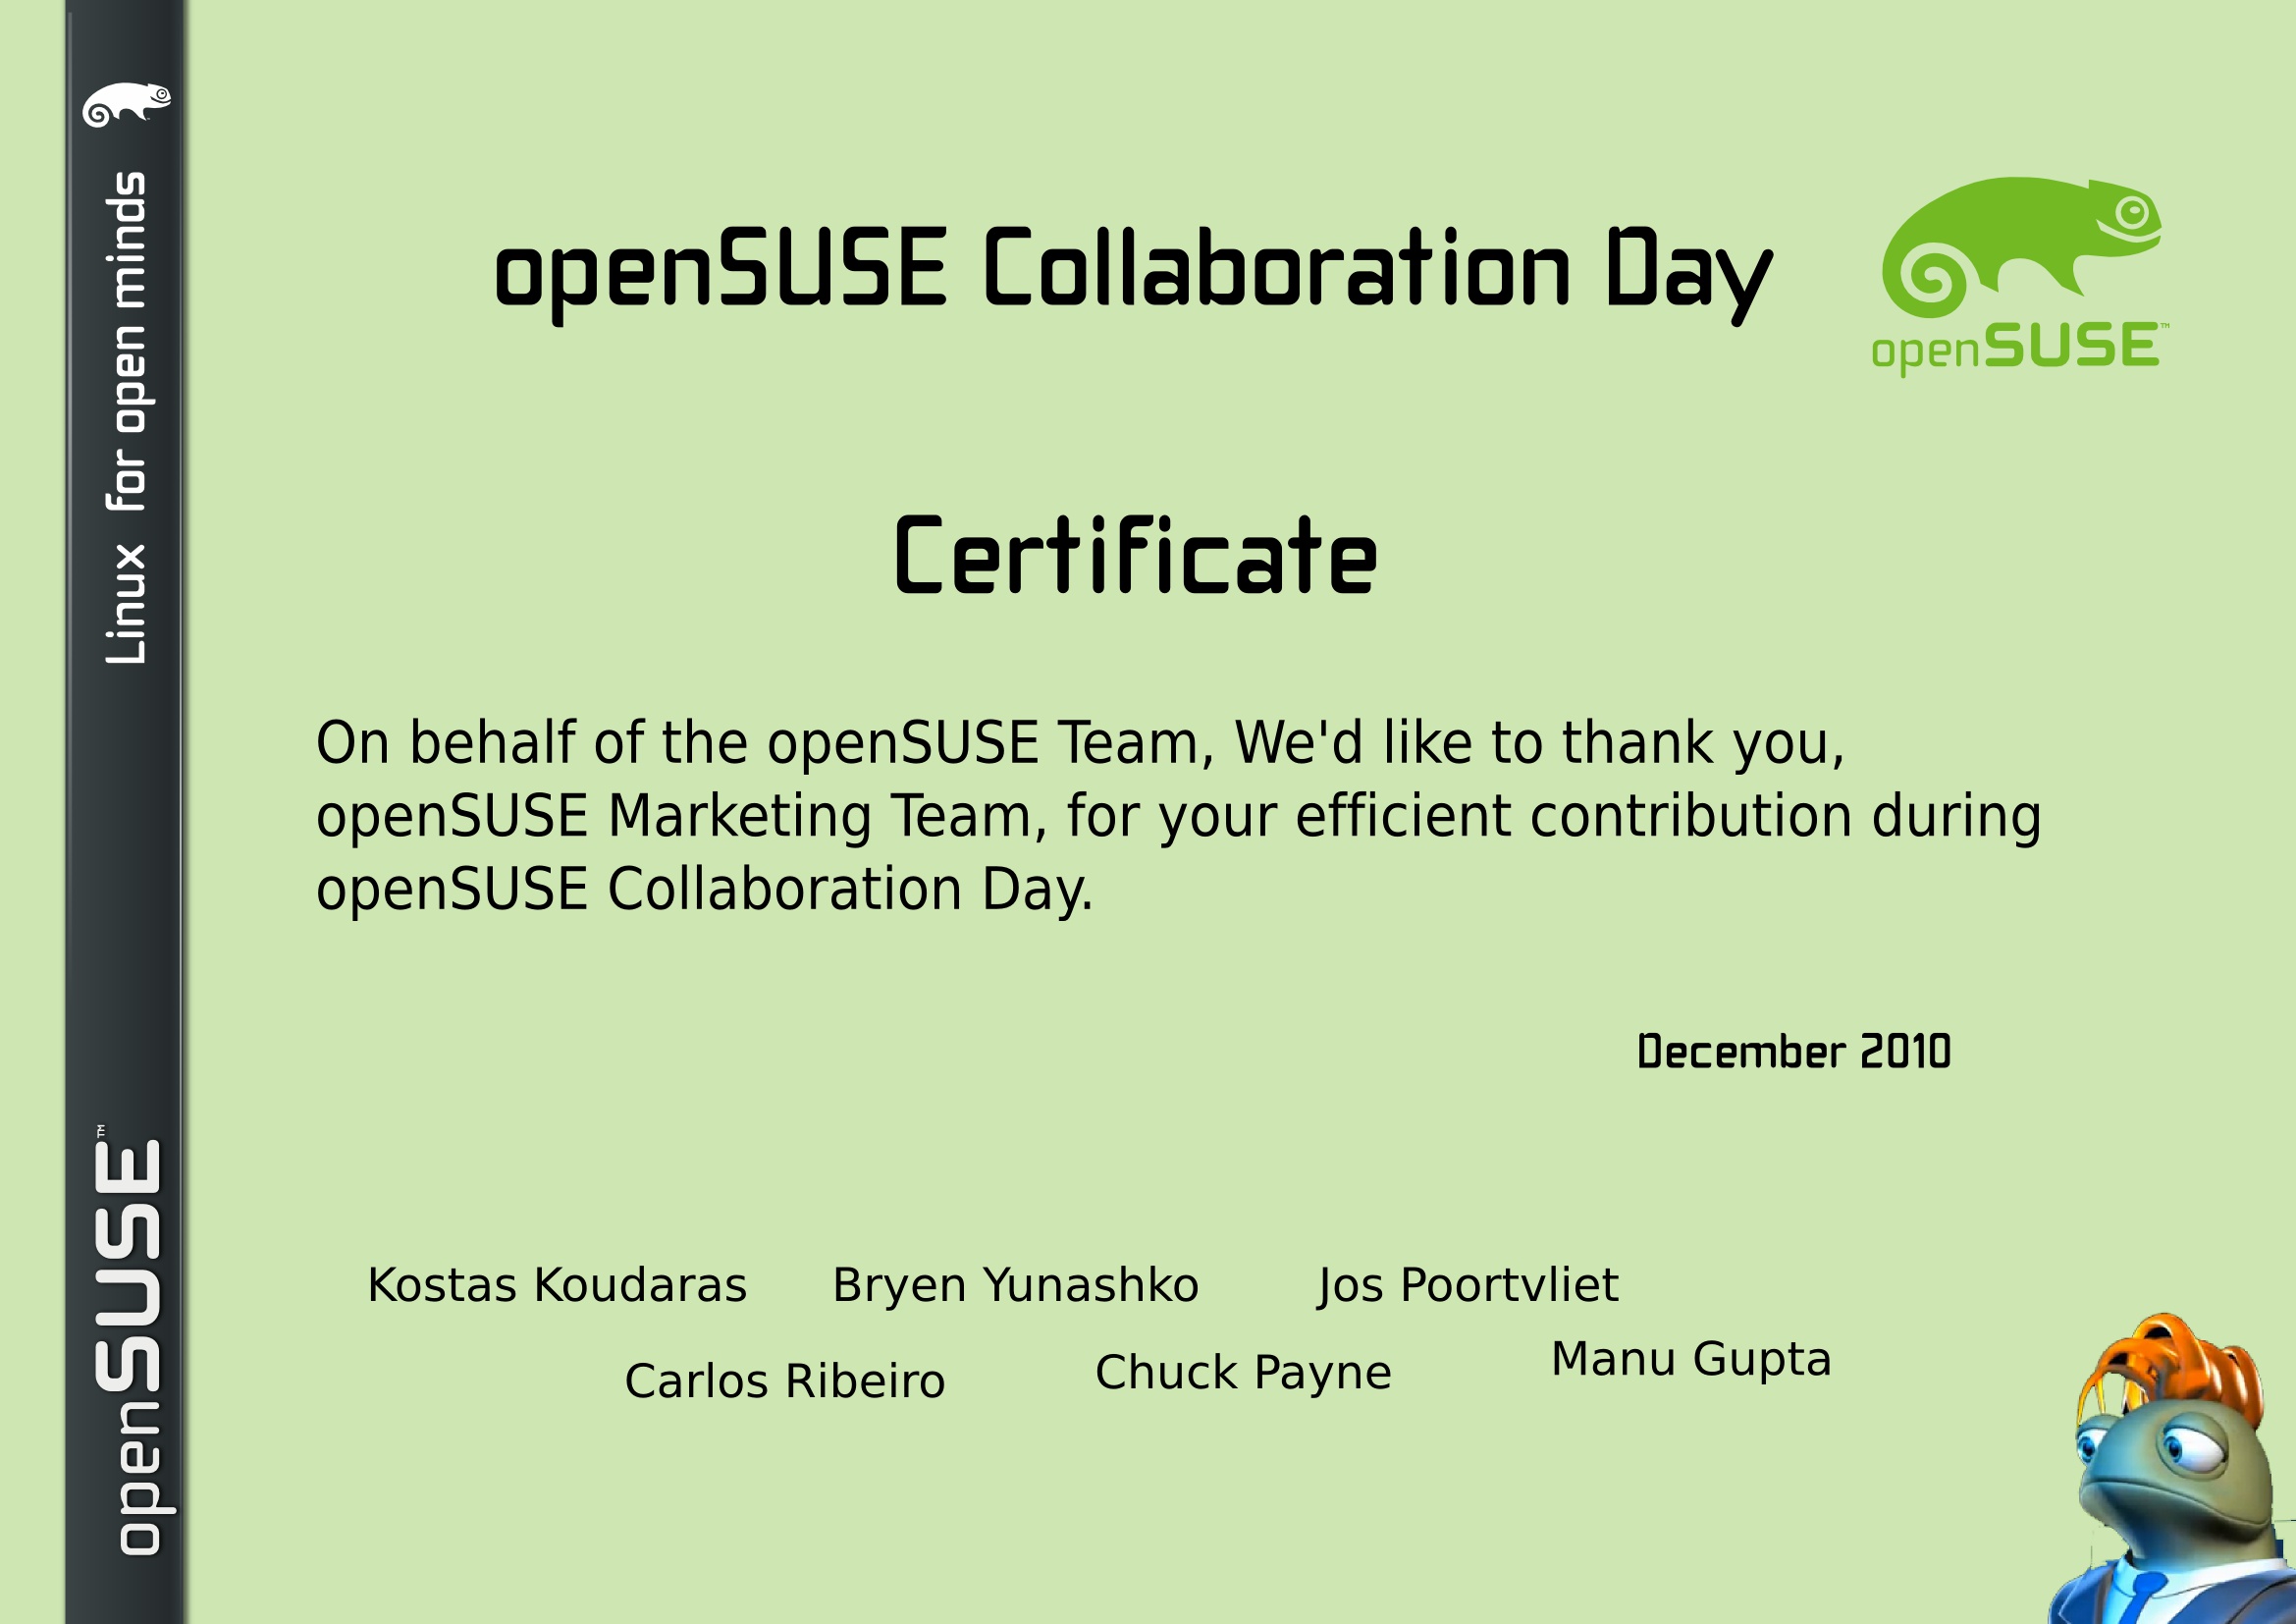 openSUSE Certificate